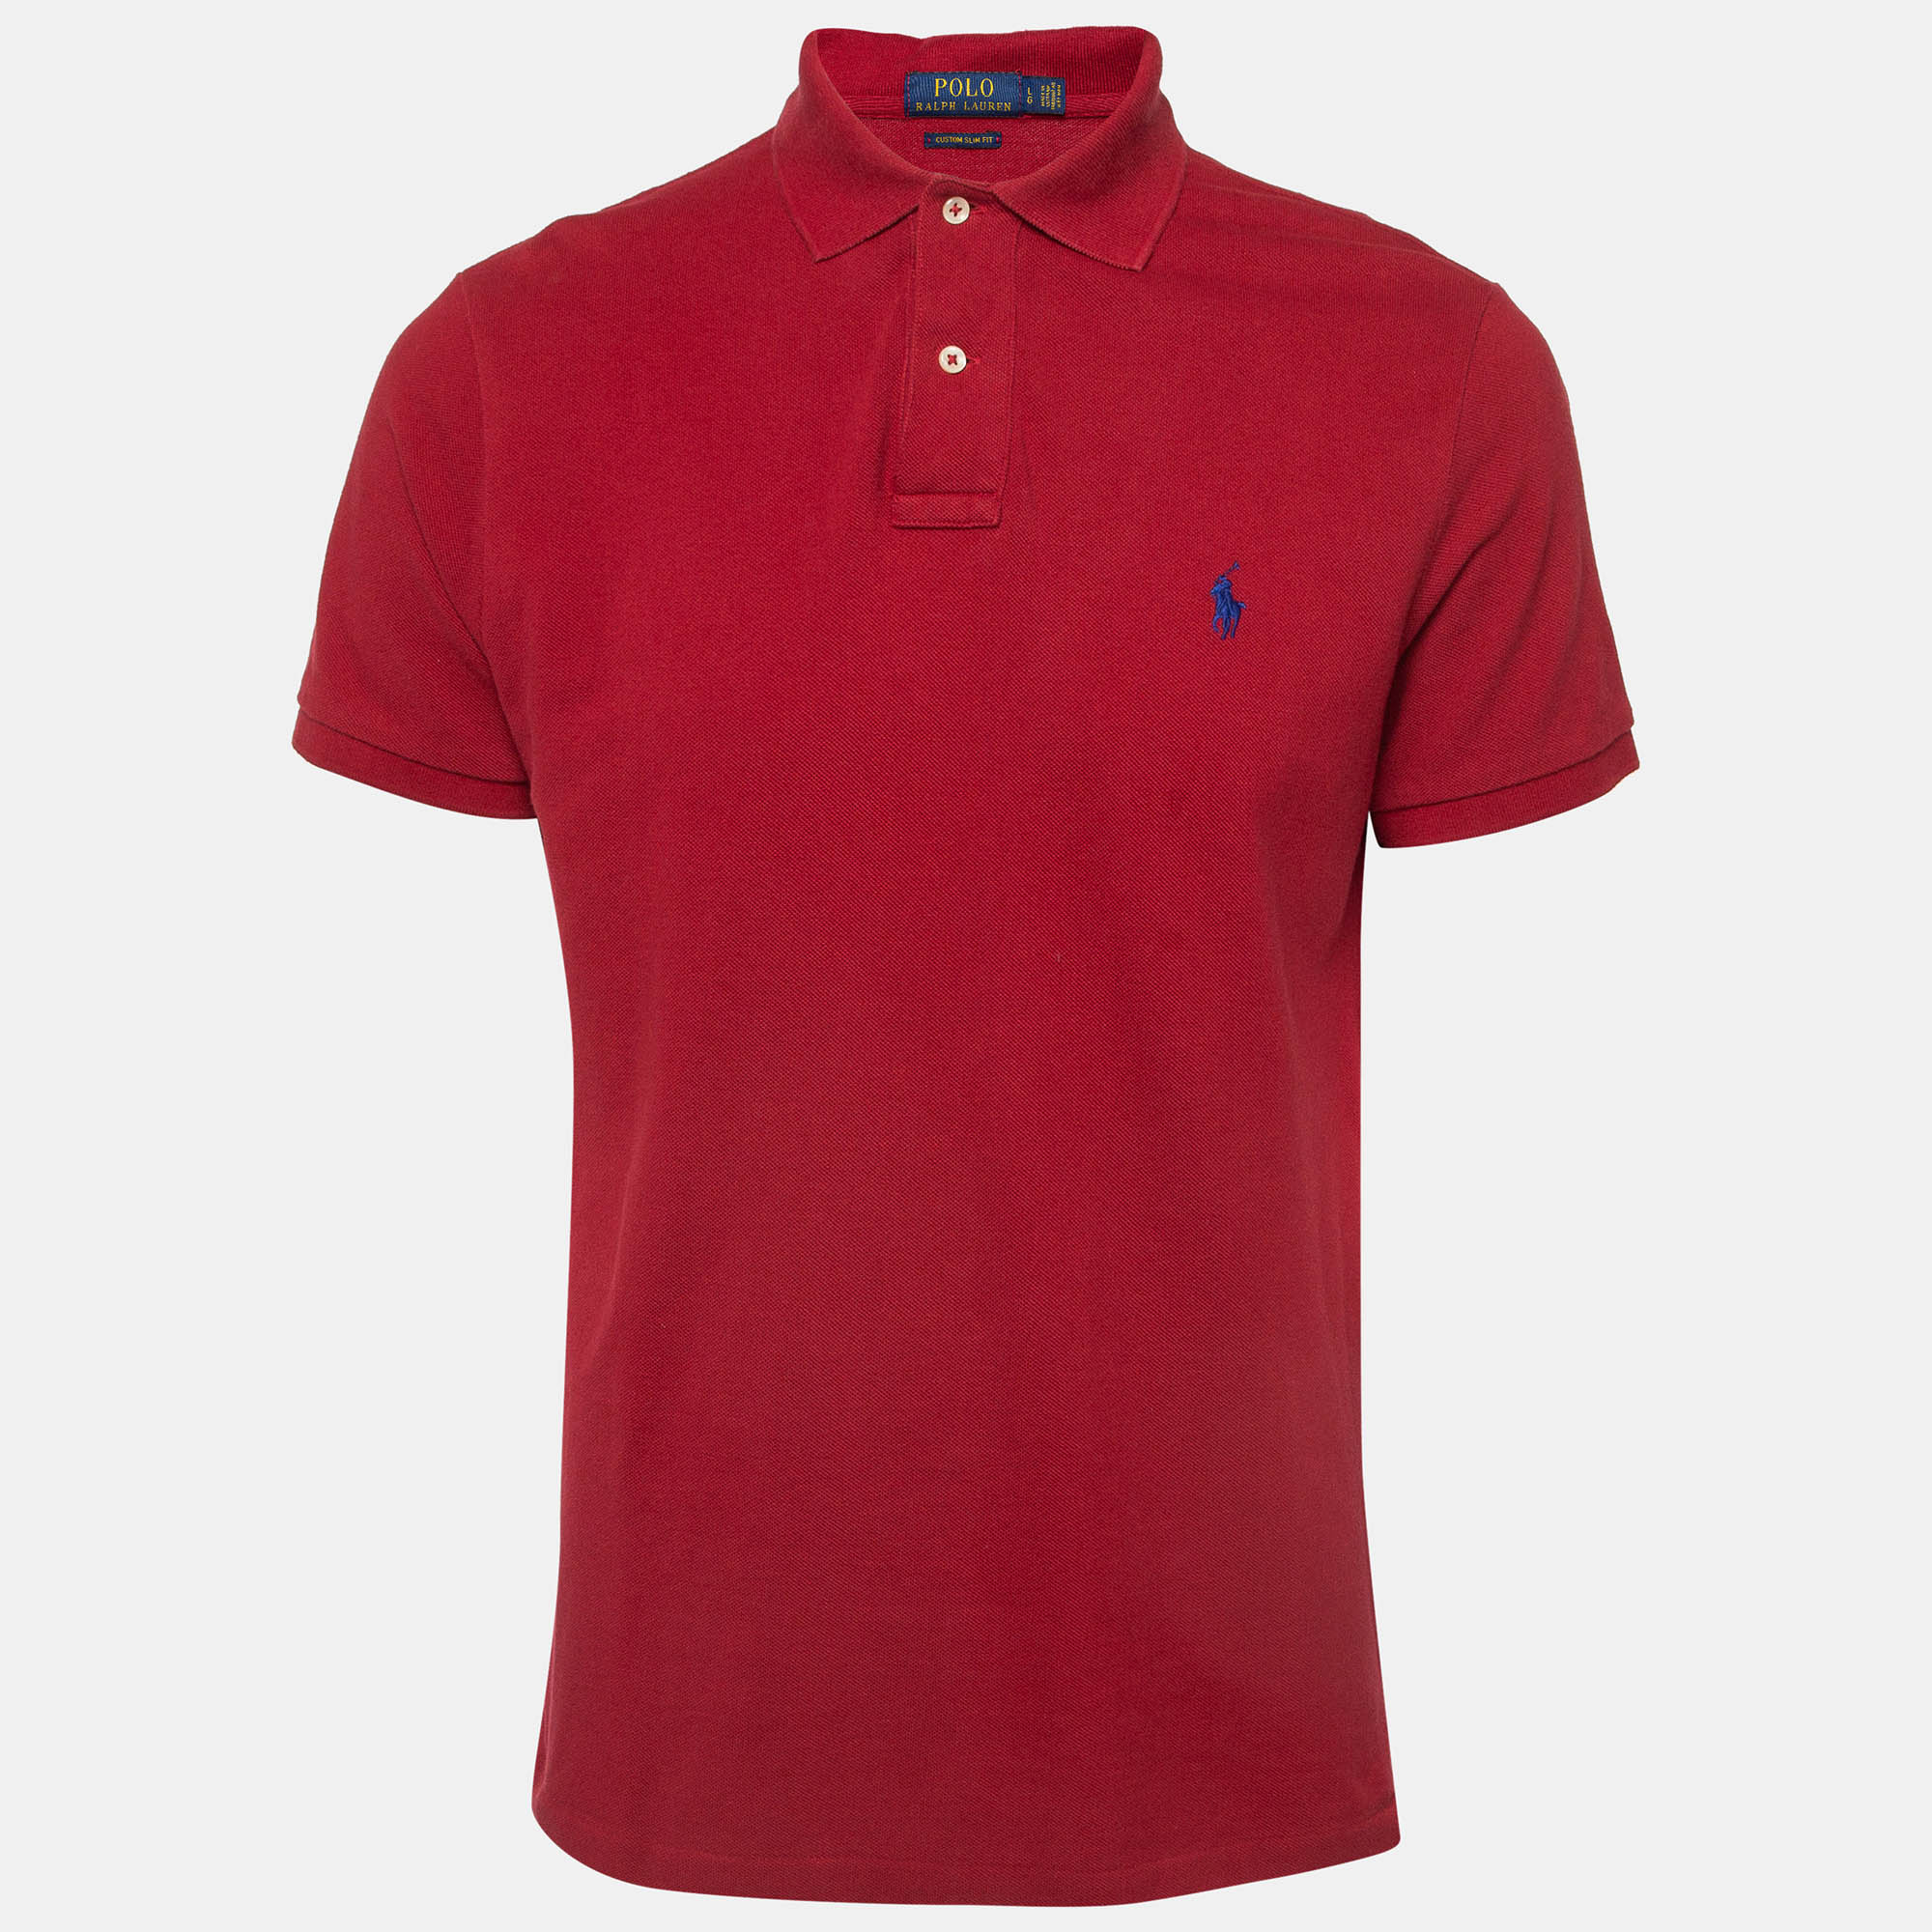 Polo ralph lauren red cotton pique polo t-shirt l